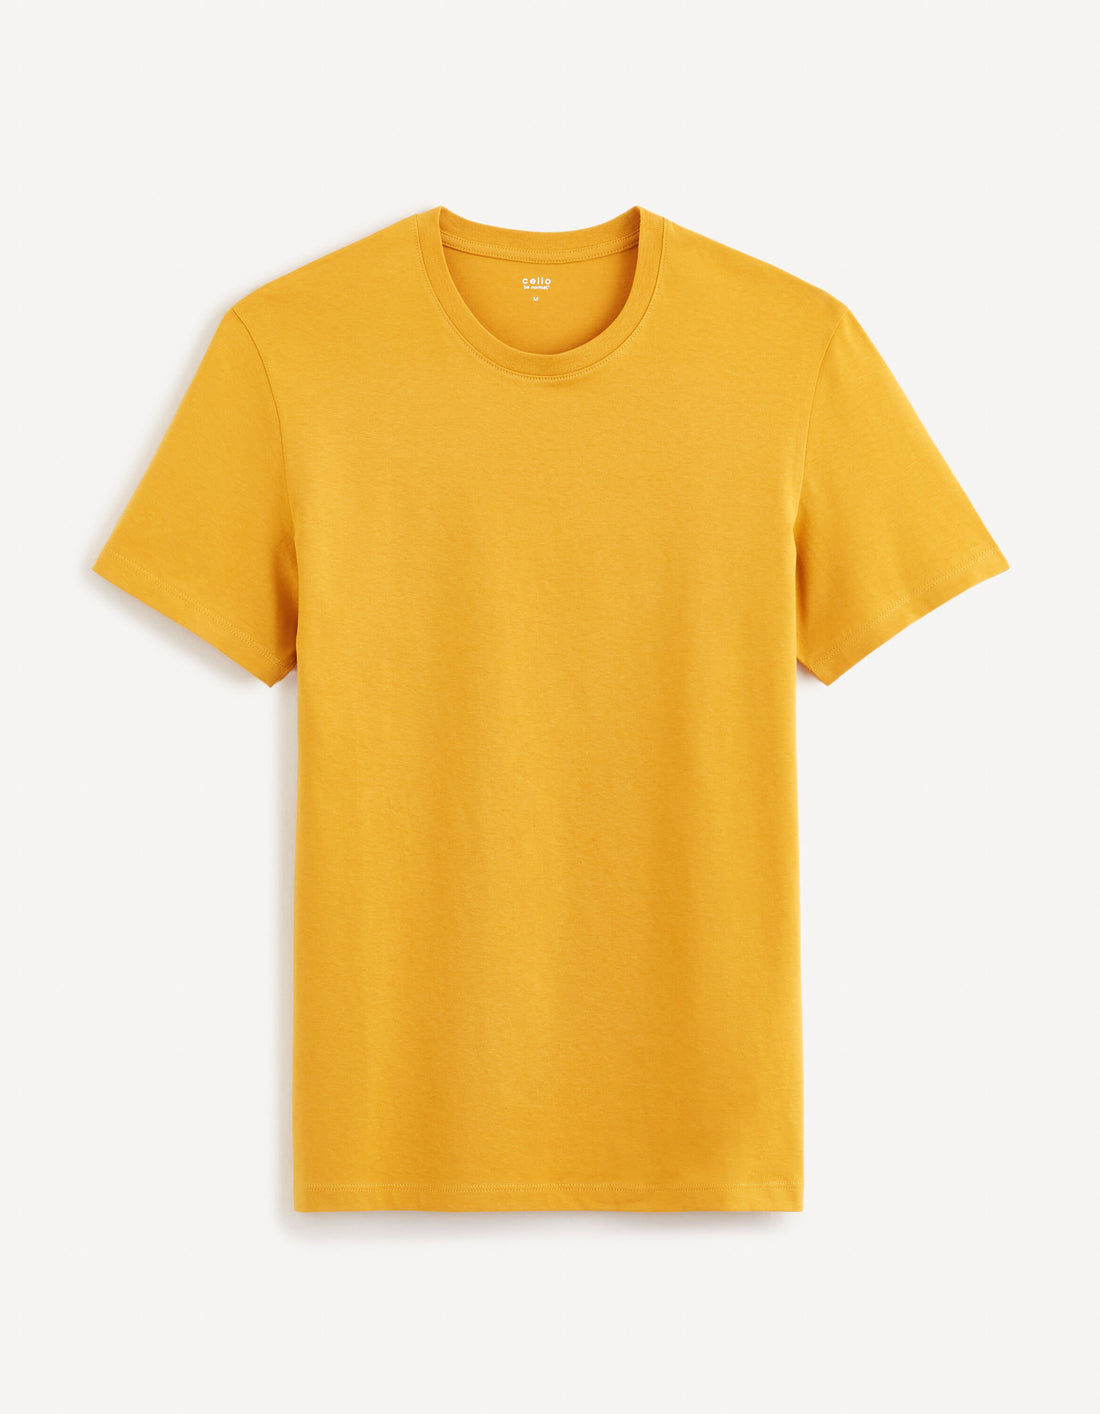 Round Neck T-Shirt 100% Cotton_TEBASE_YELLOW GOLDEN_02